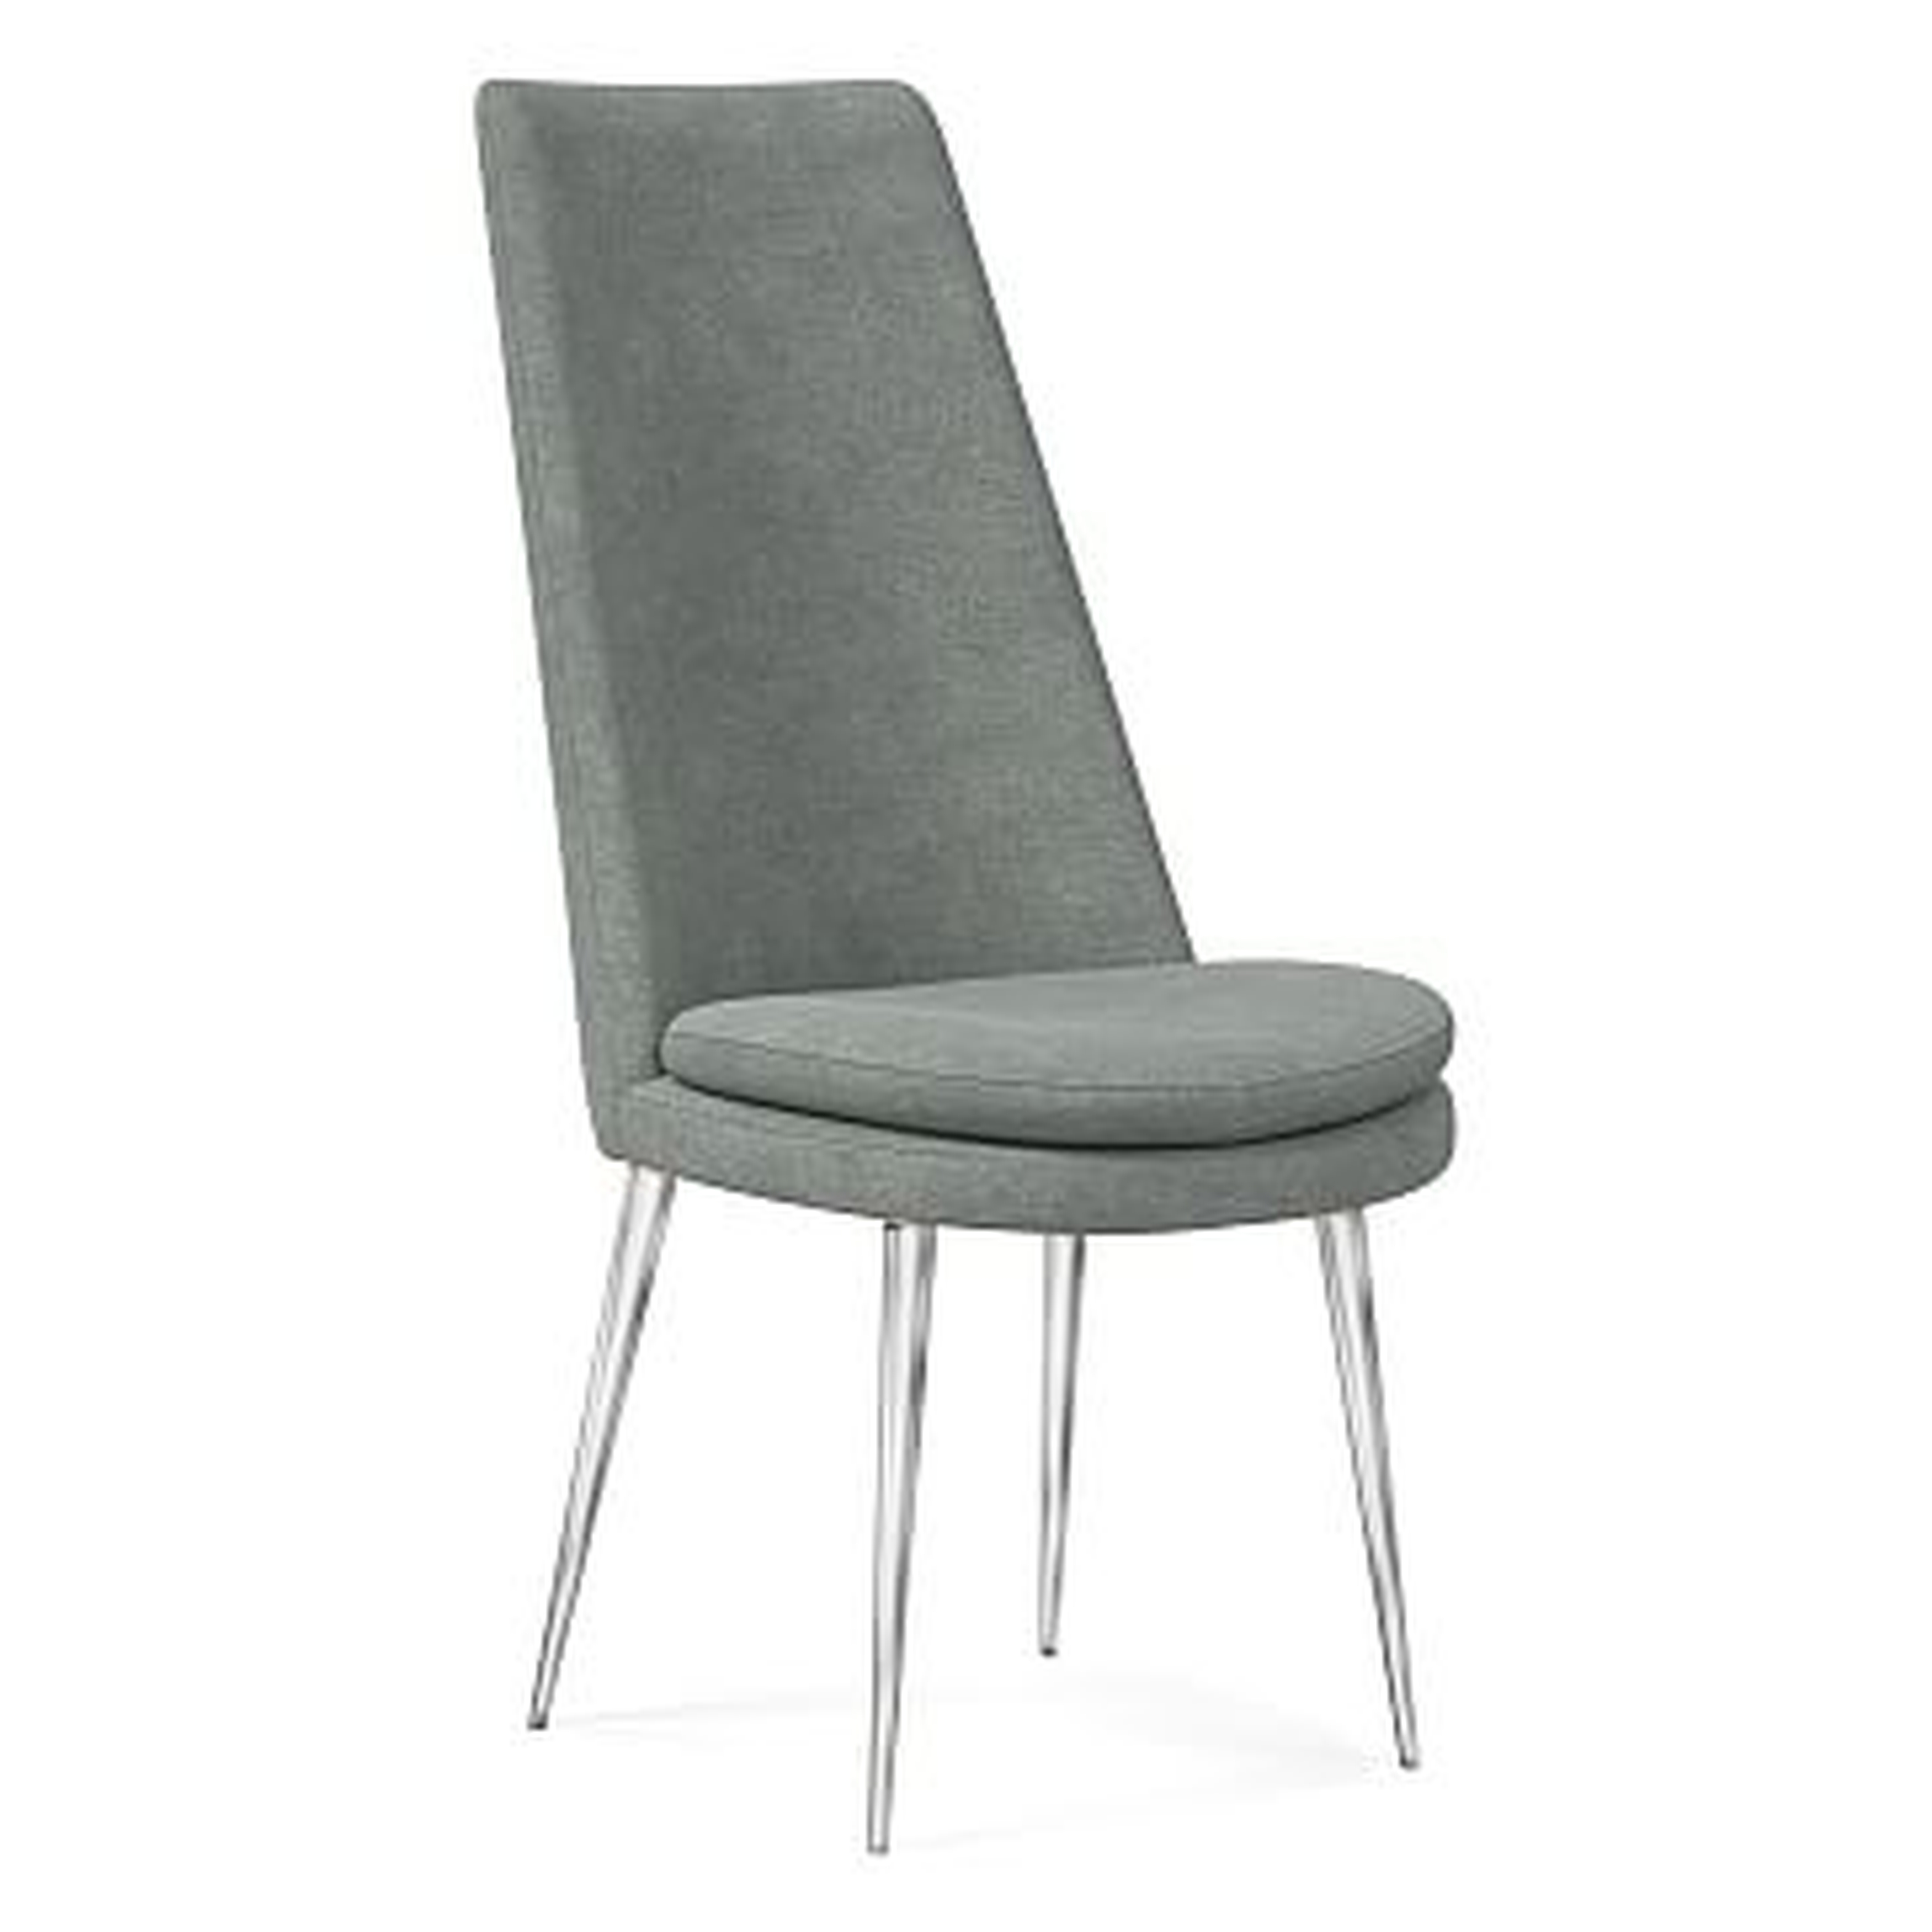 Finley High Back Upholstered Dining Chair, Distressed Velvet, Mineral Gray, Chrome - West Elm